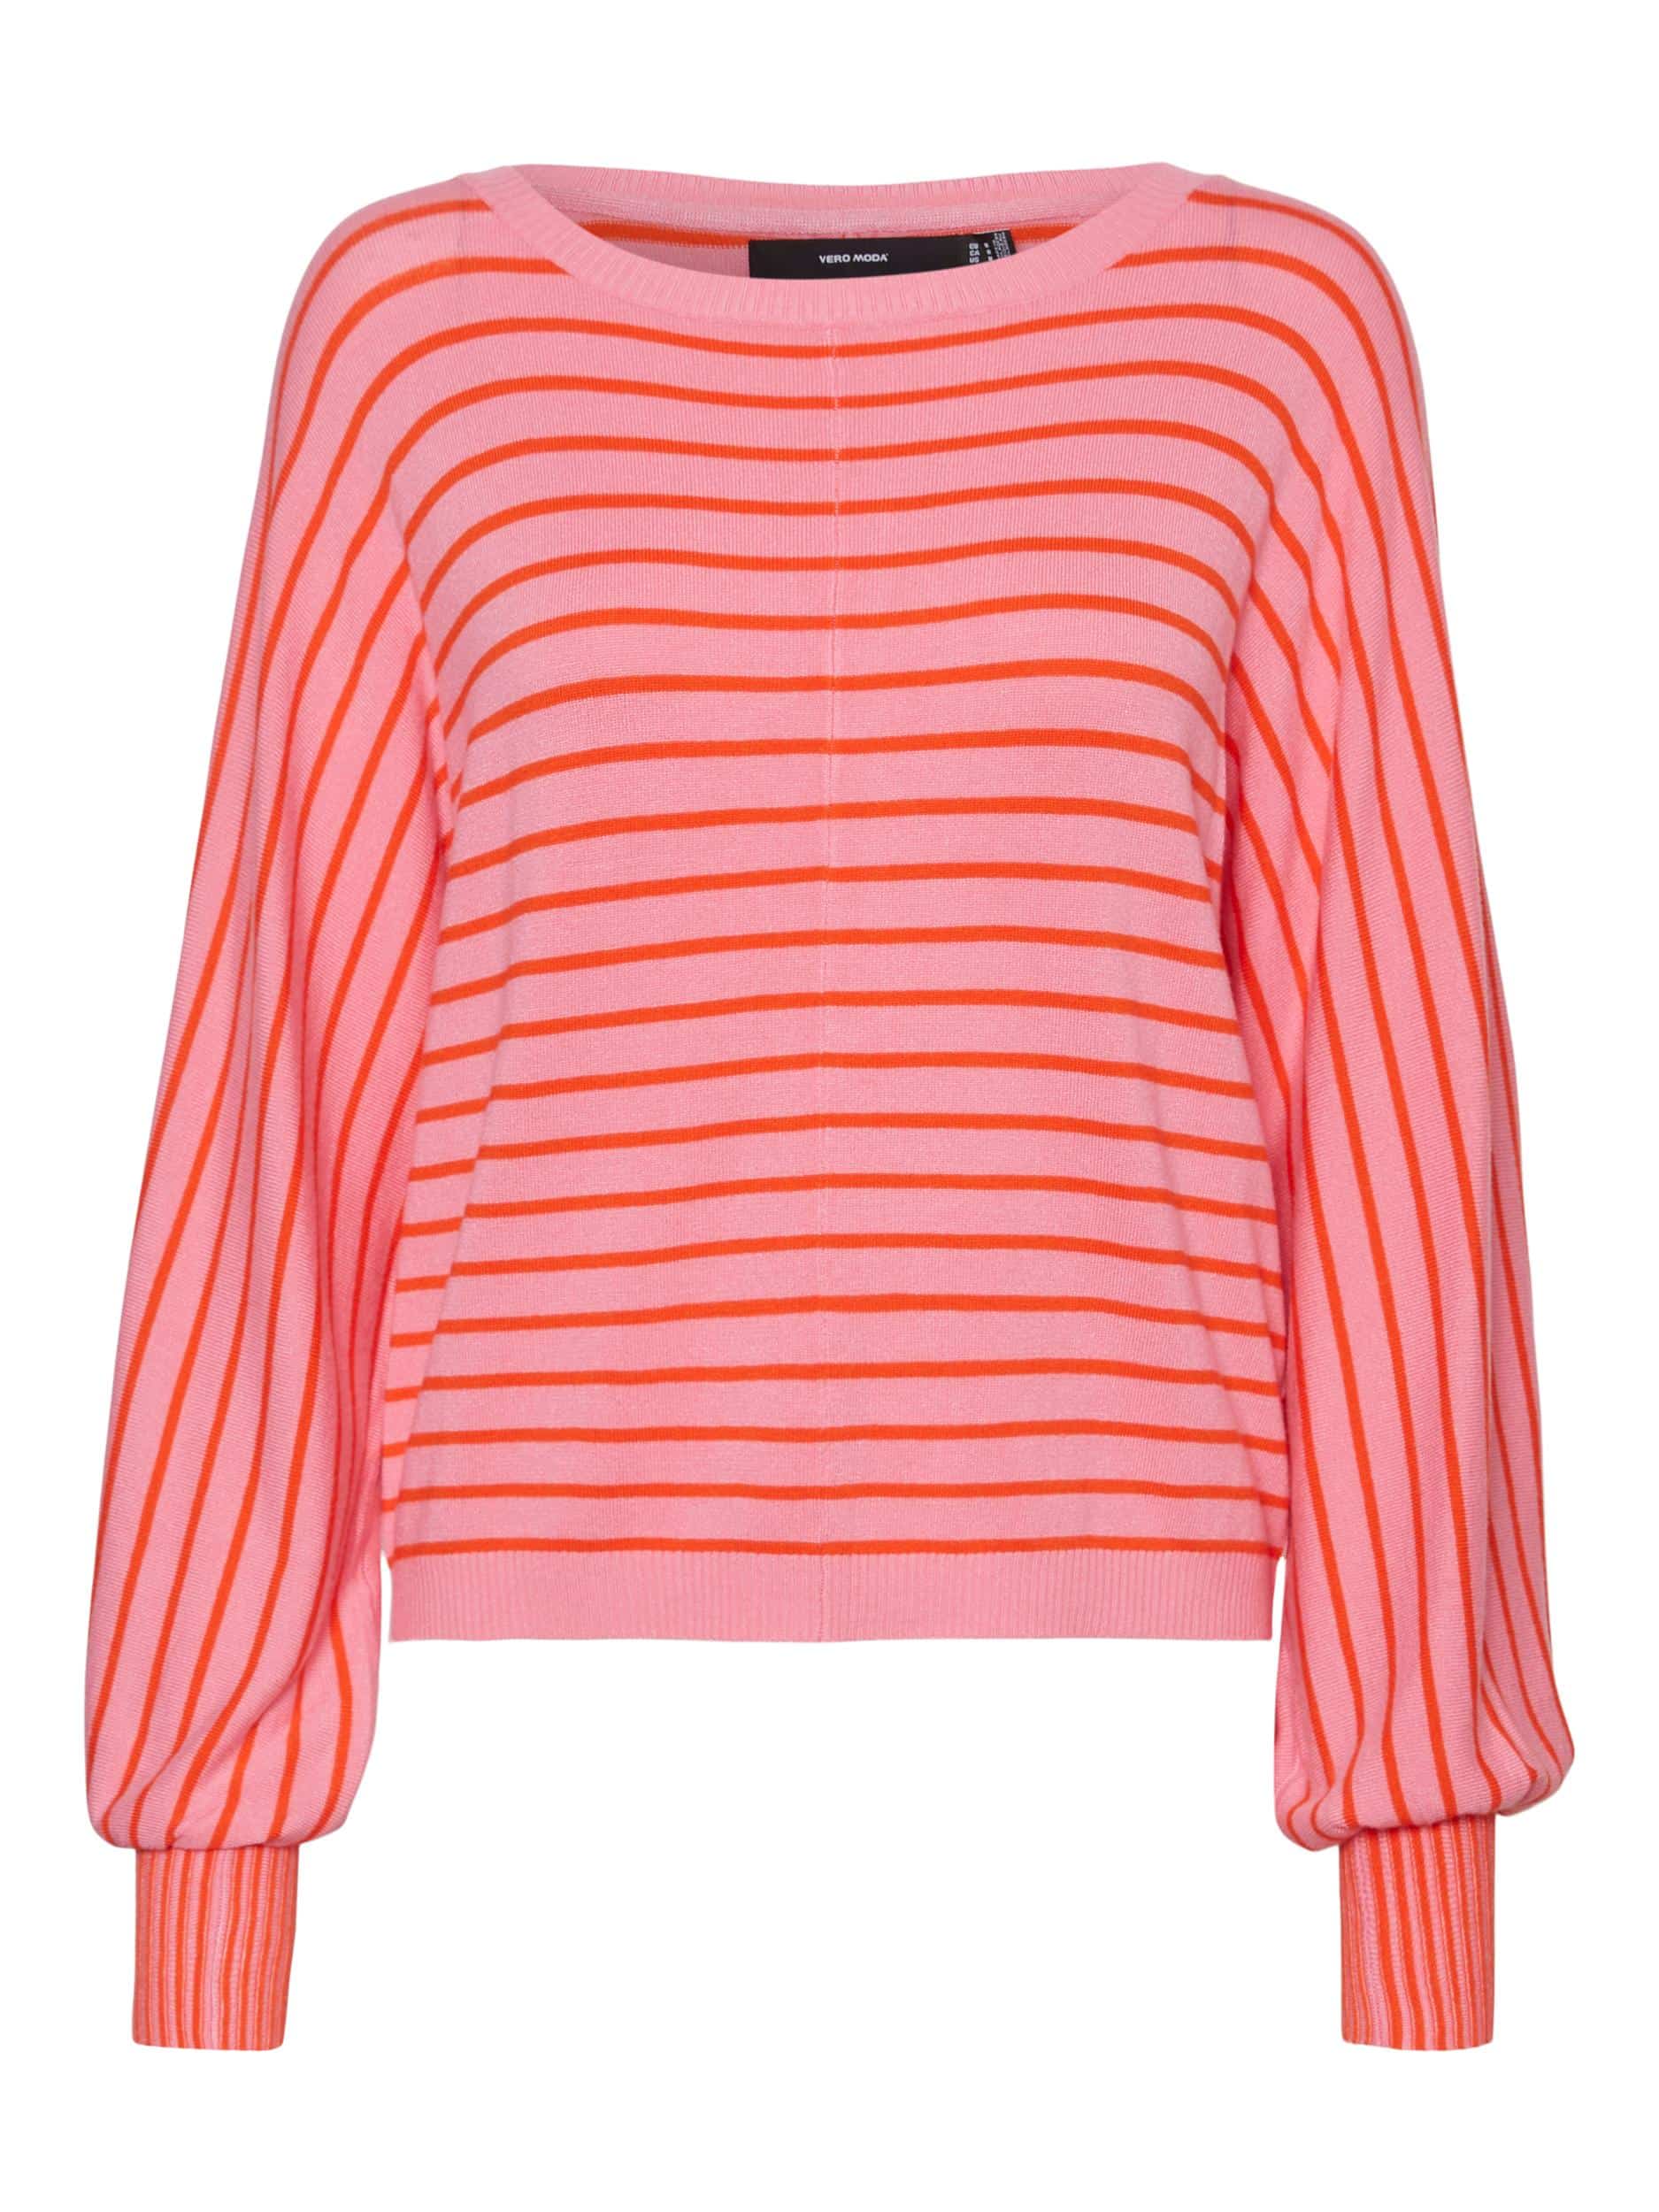 Dahlia- Sachet Pink Orange Stripe